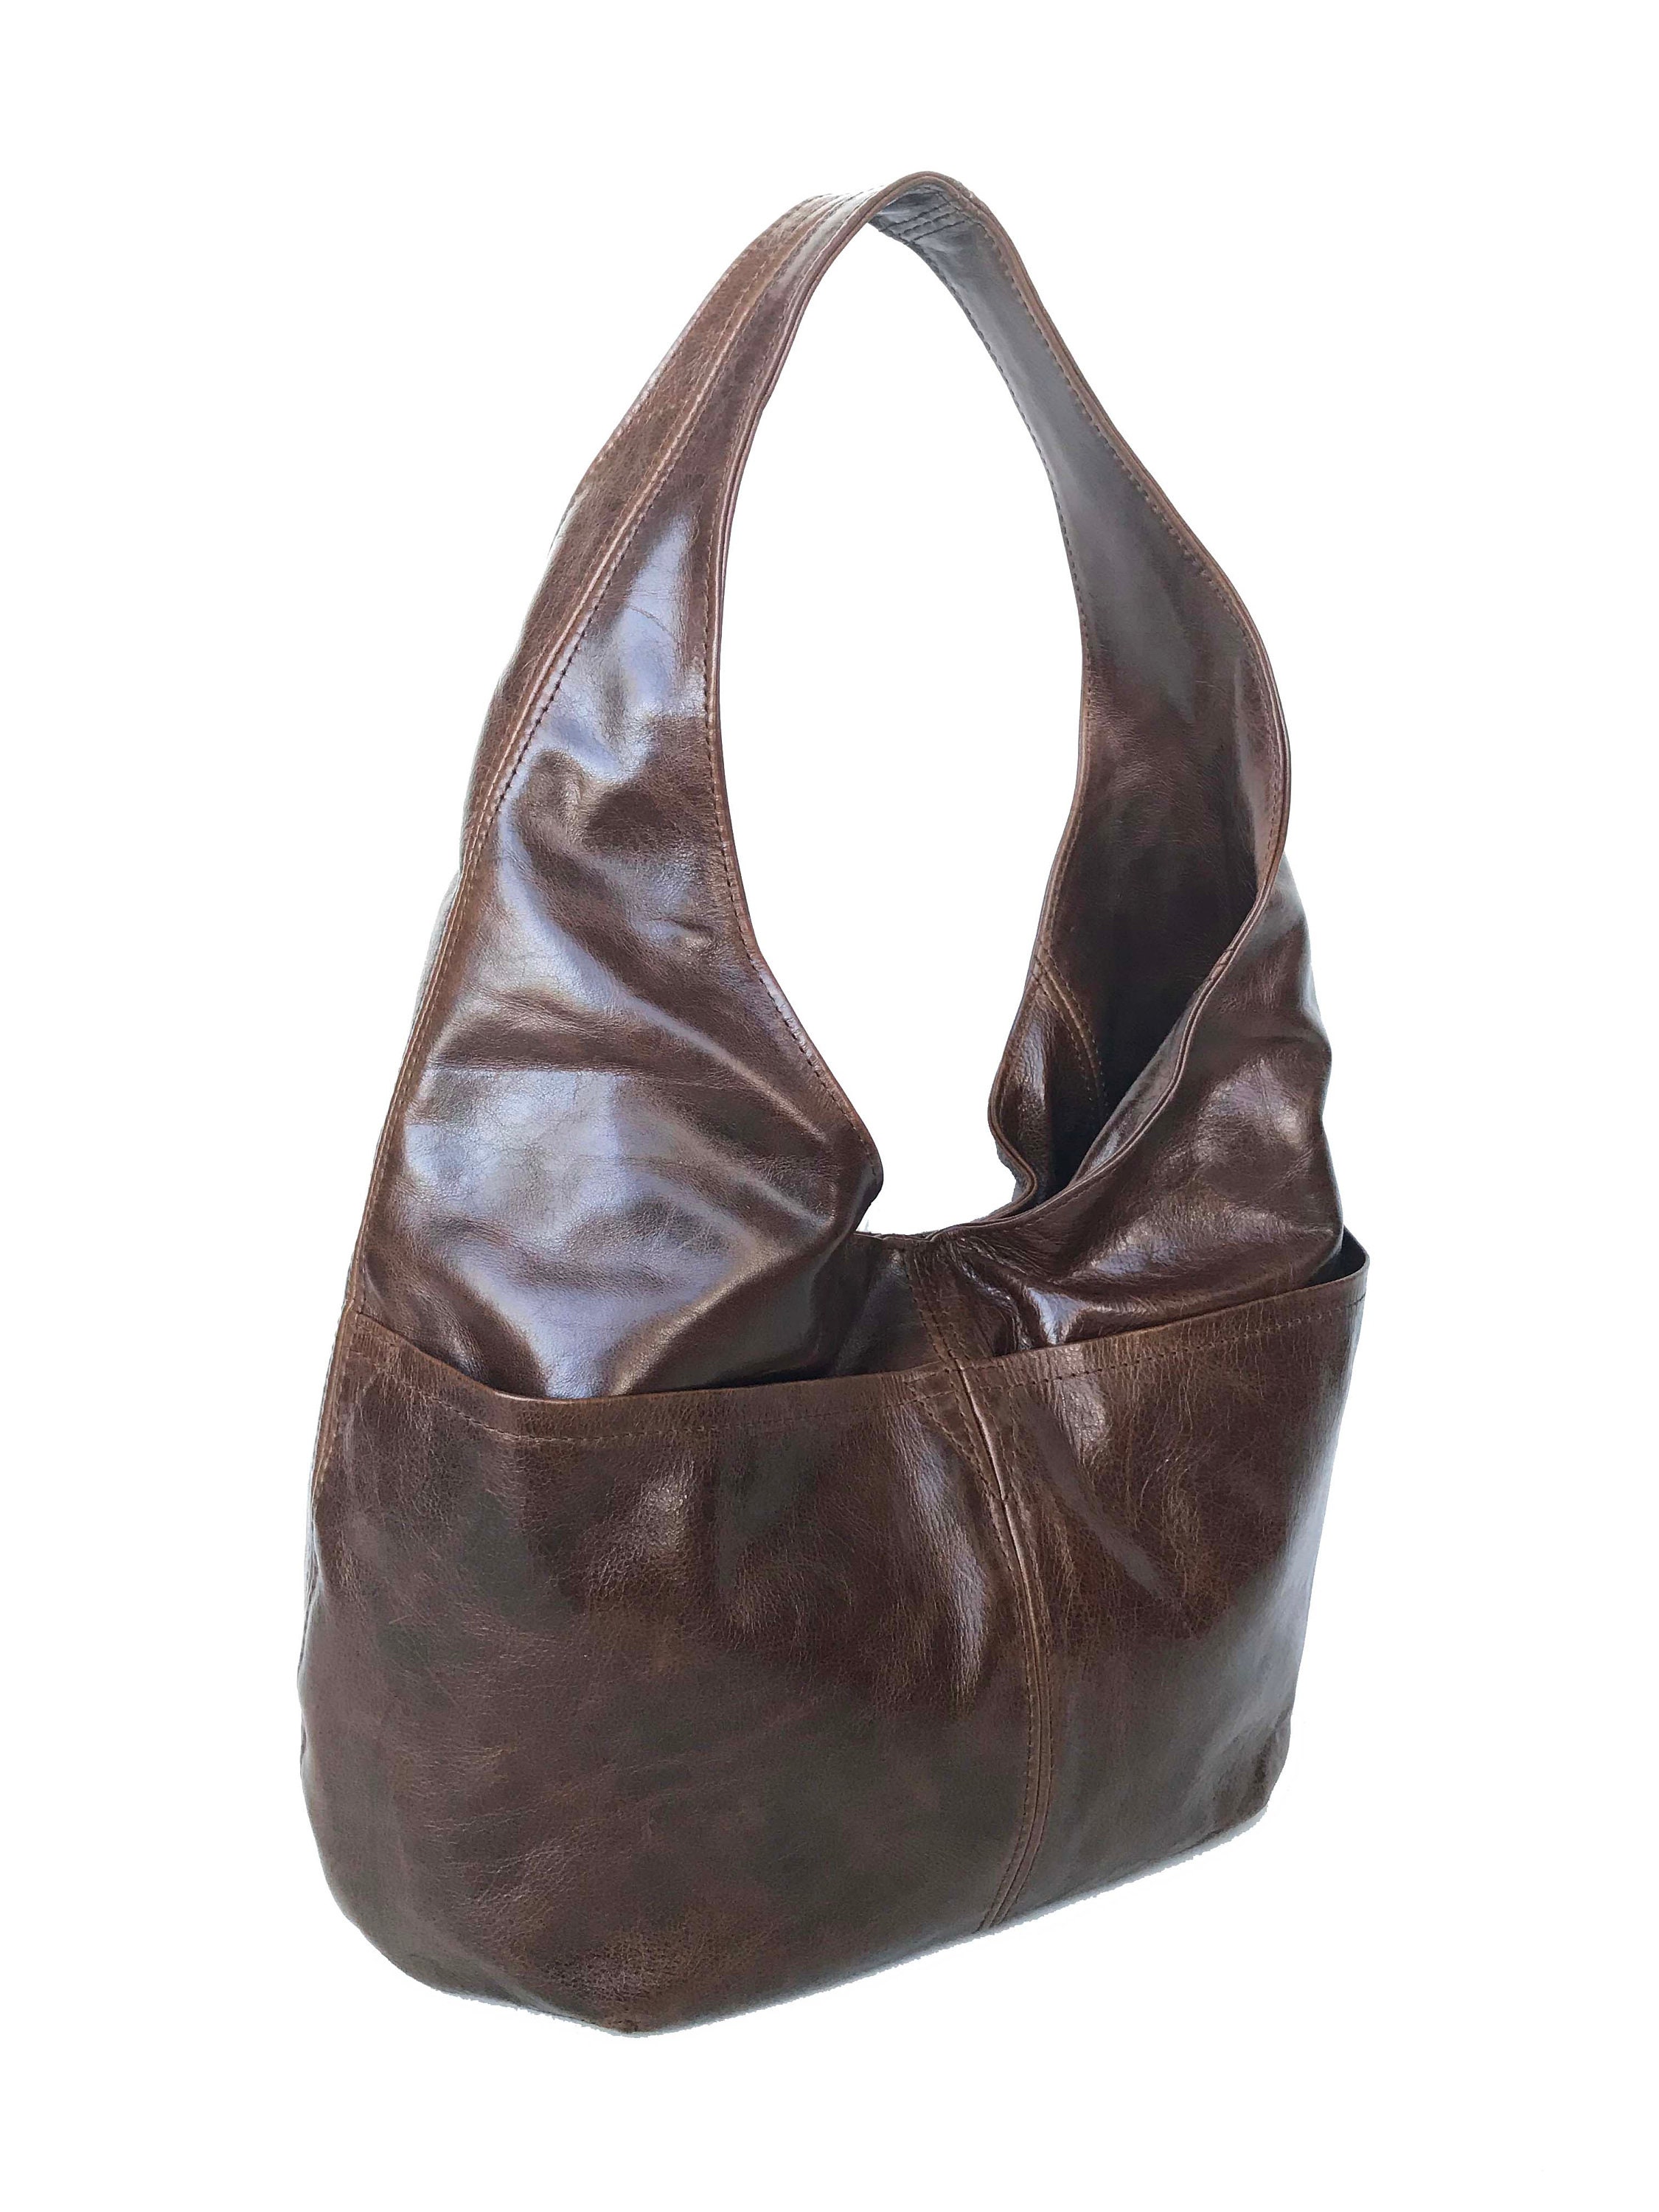 Distressed Brown Leather Hobo Bag for Women Handmade Handbags | Etsy